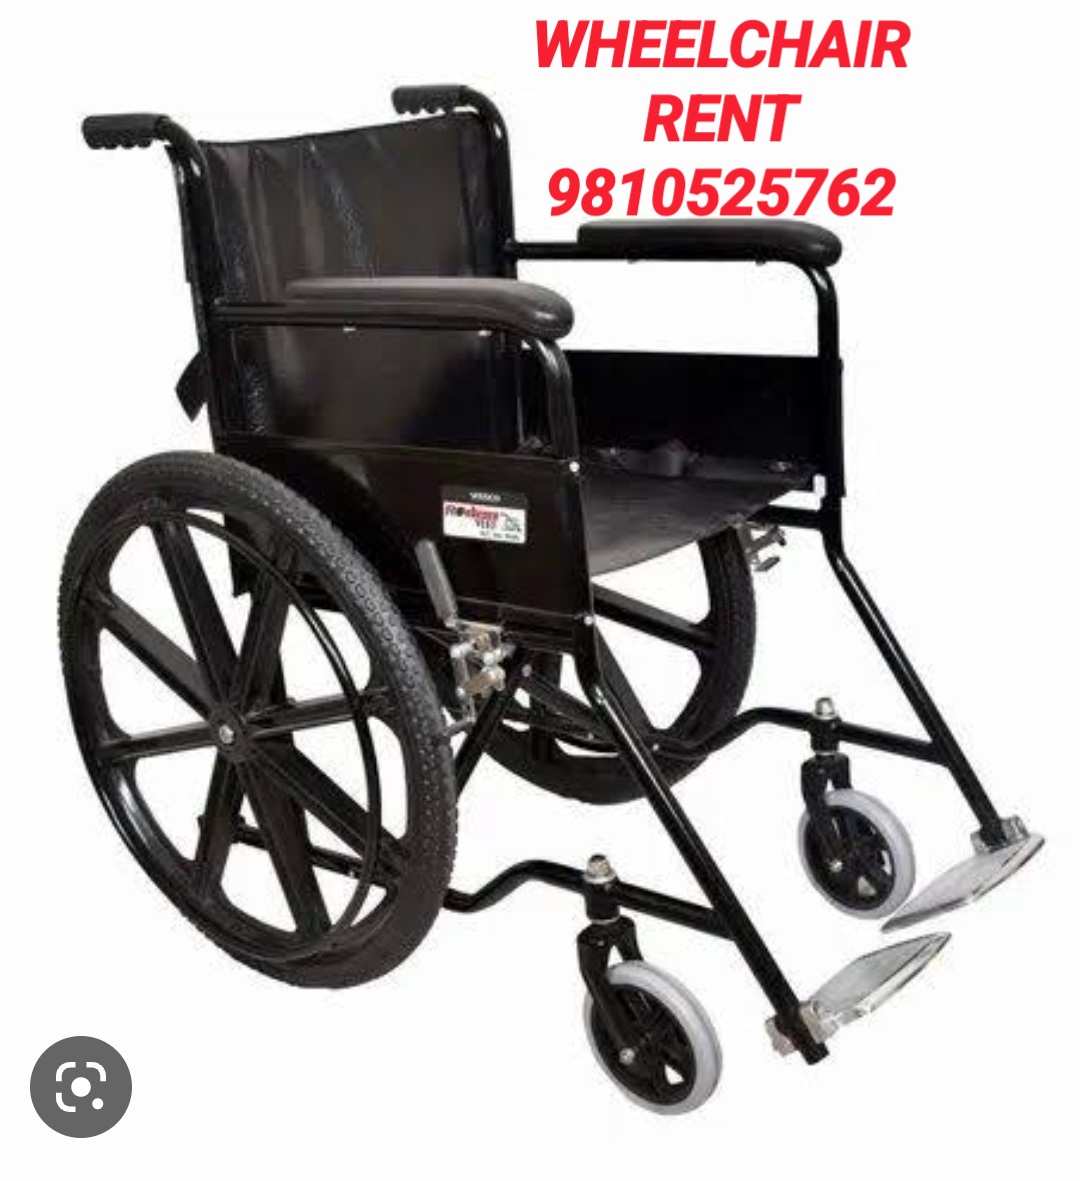 WheelChair For Rent In Ghaziabad Delhi 9810525762